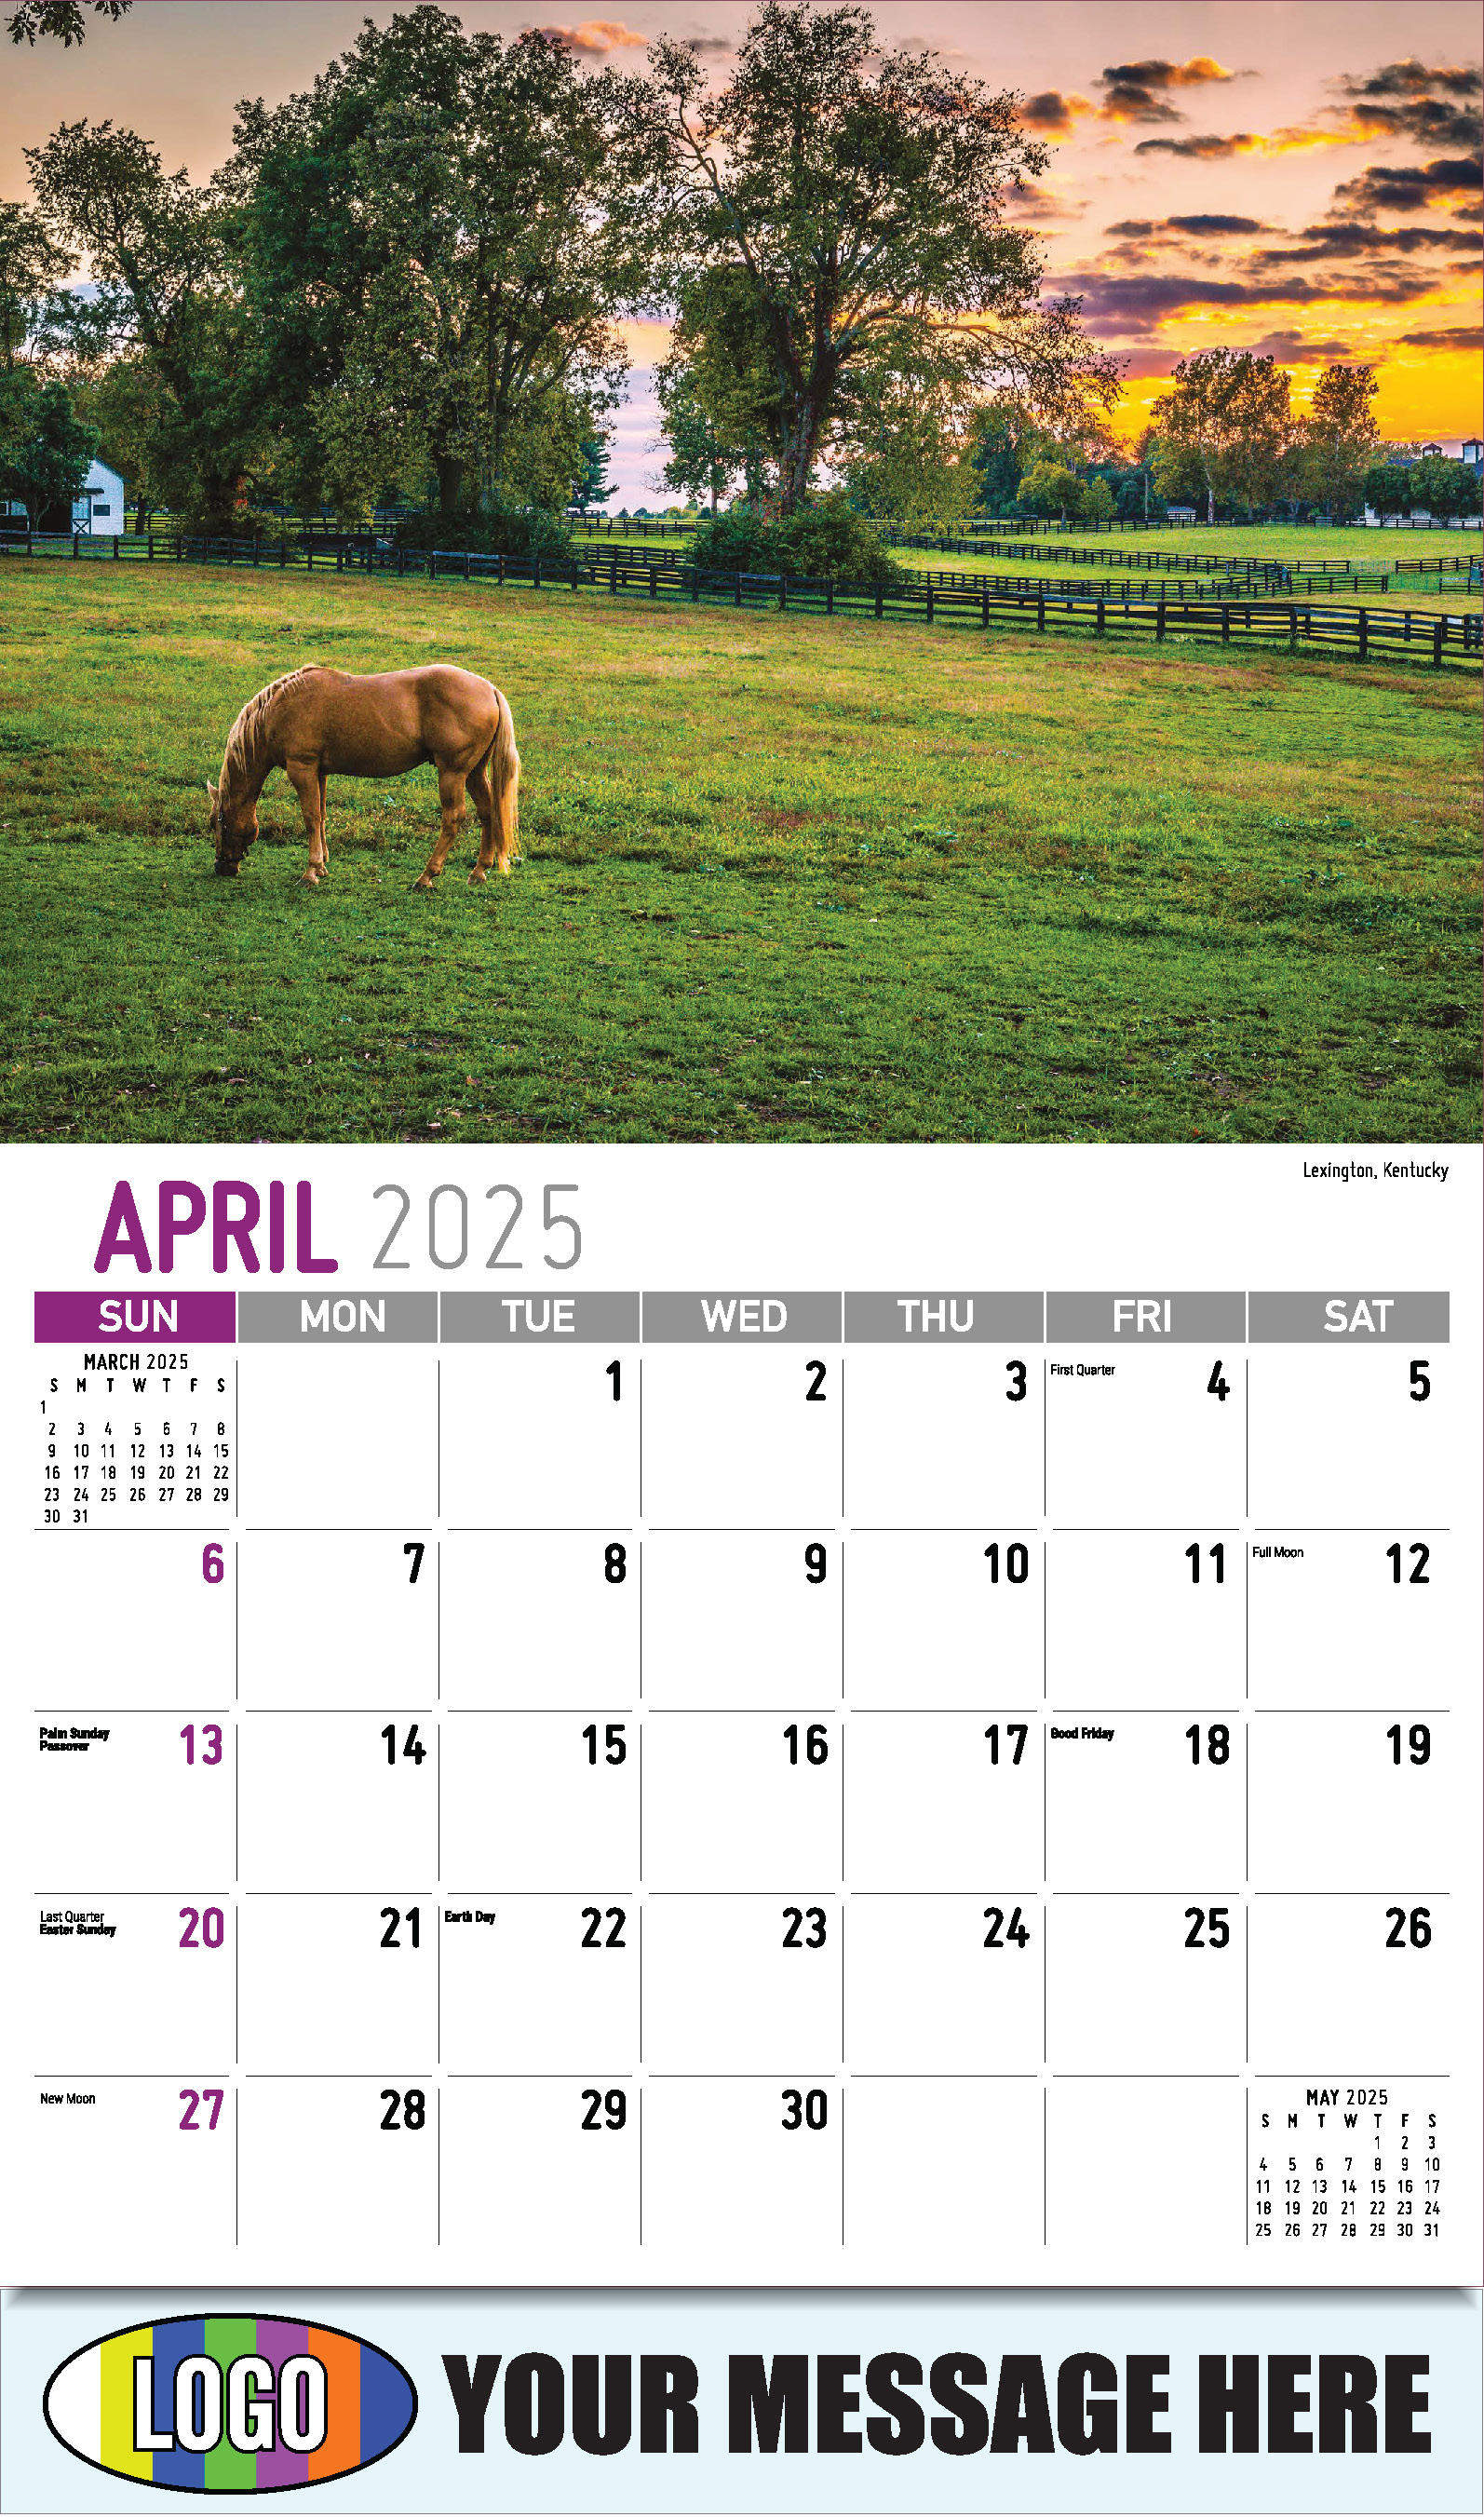 Scenes of Southeast USA 2025 Business Promo Wall Calendar - April